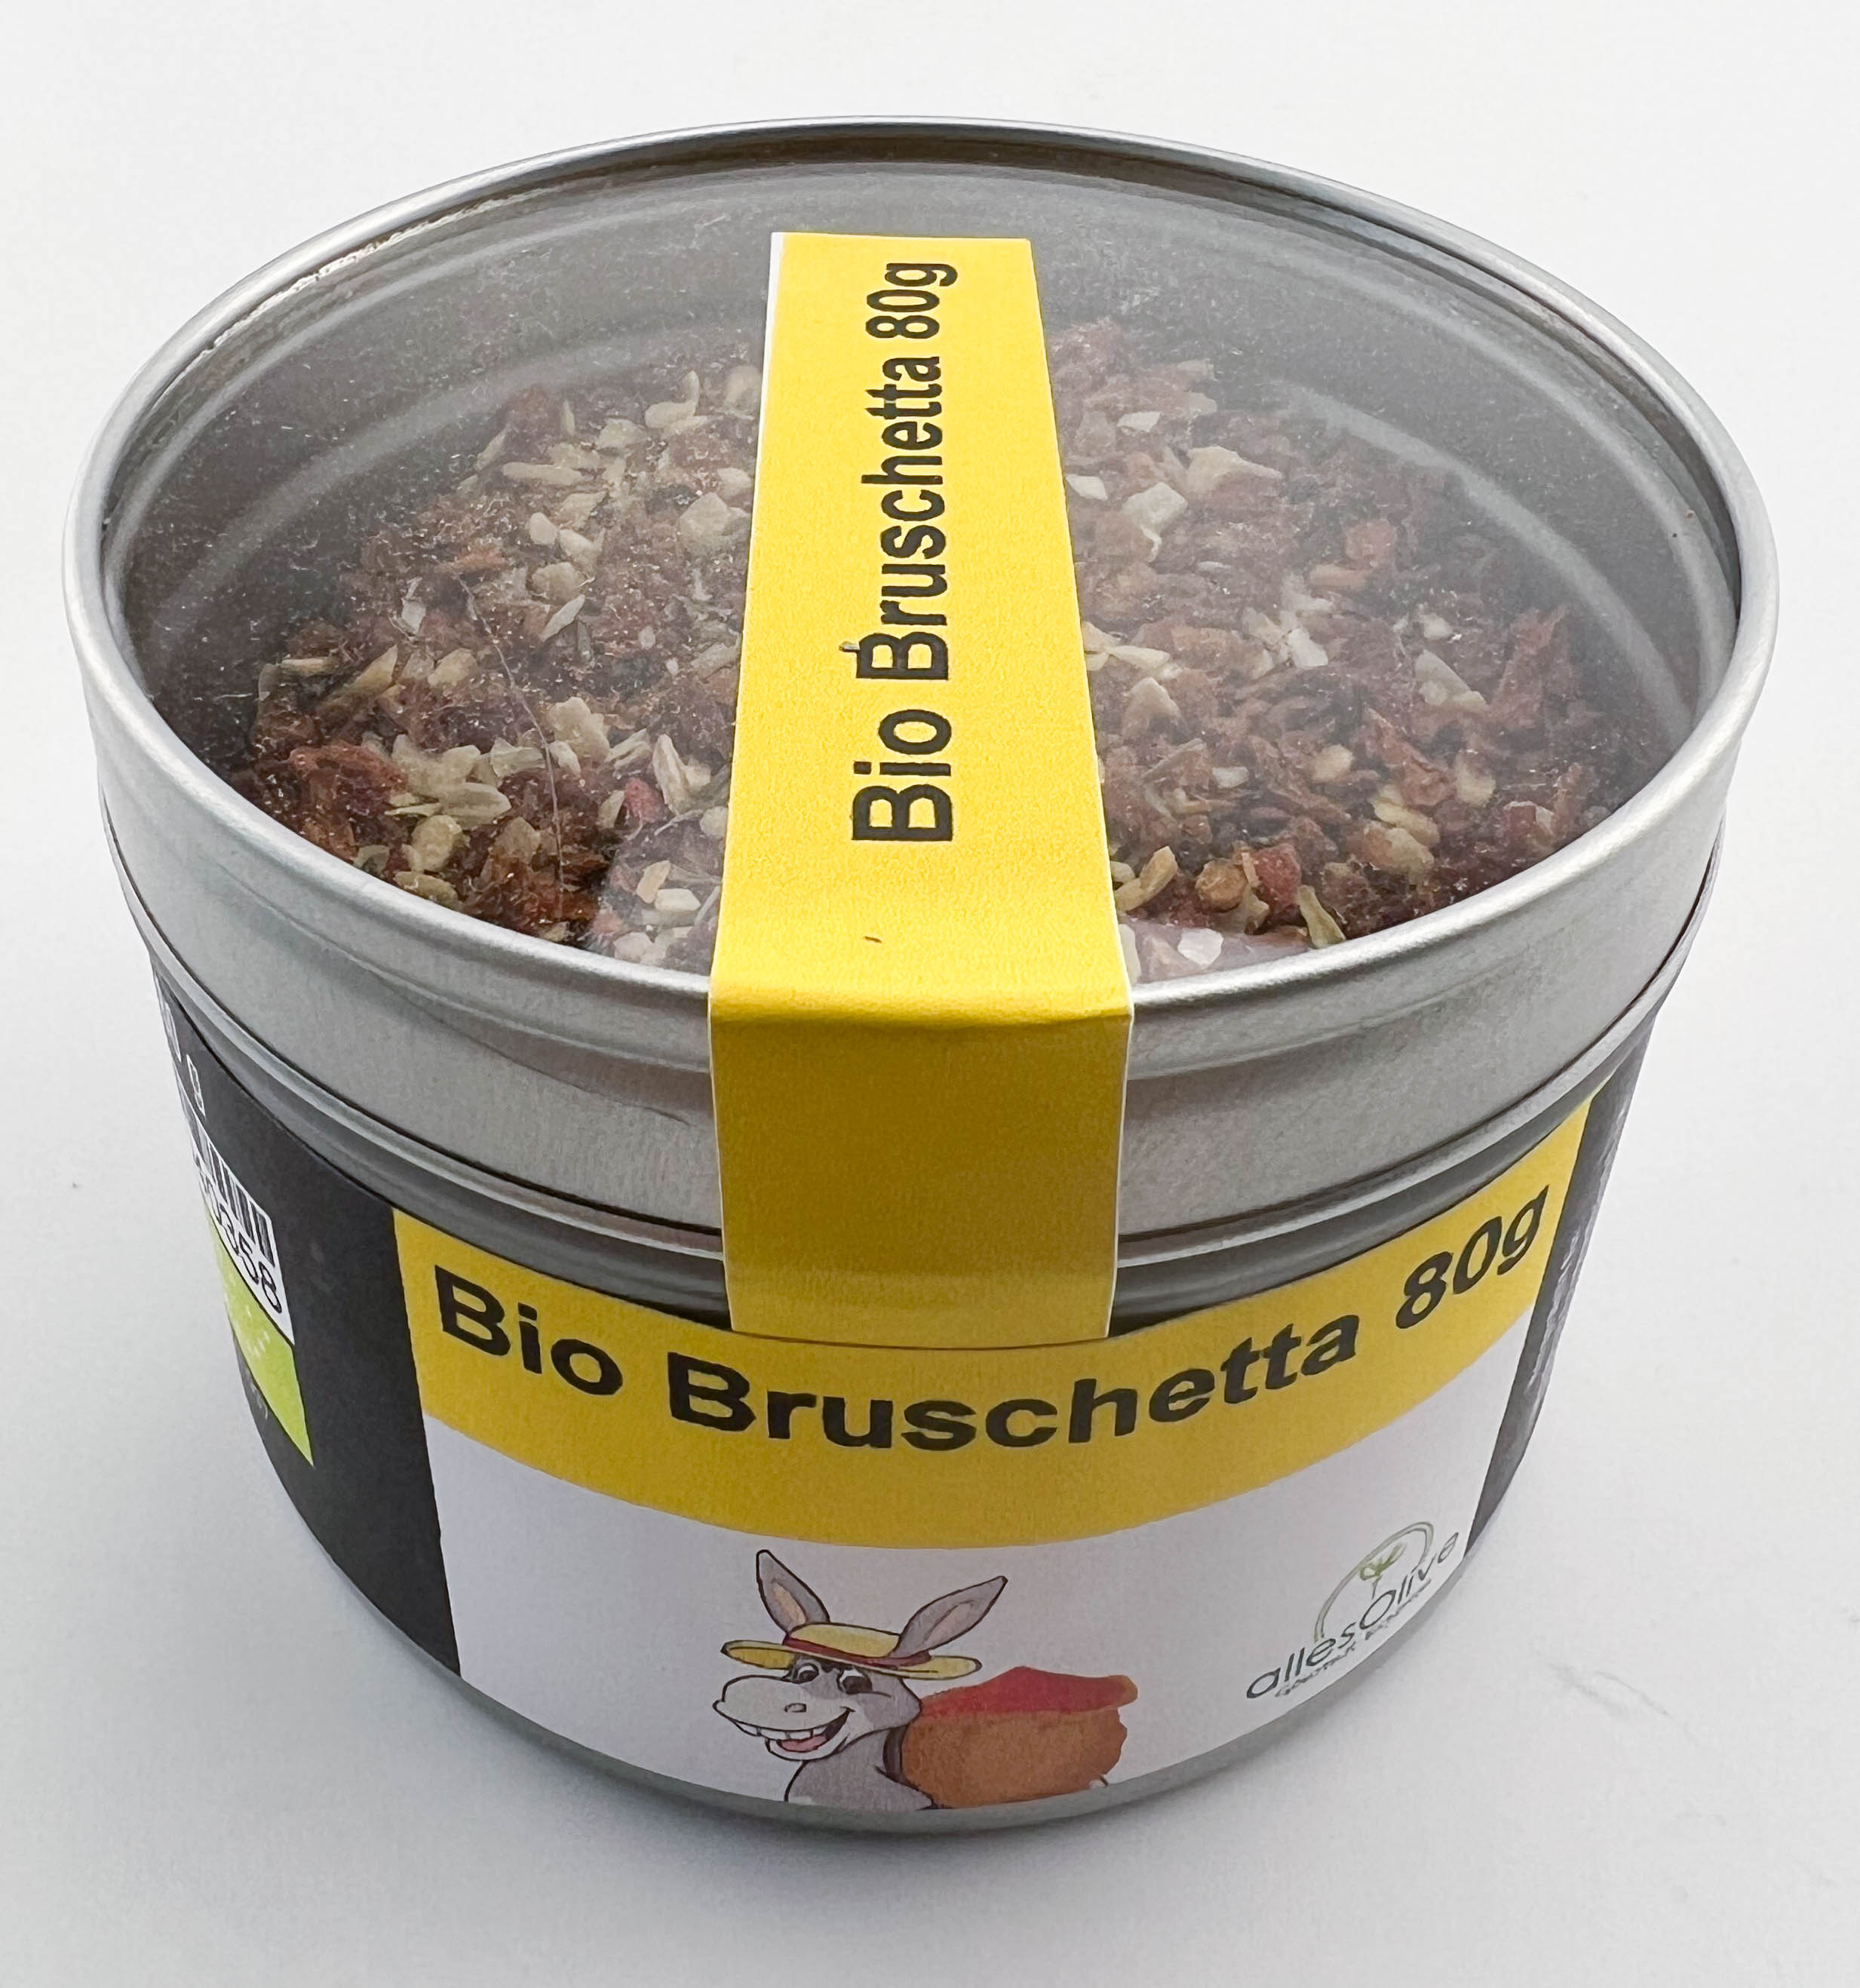 Bio Bruschetta 80g